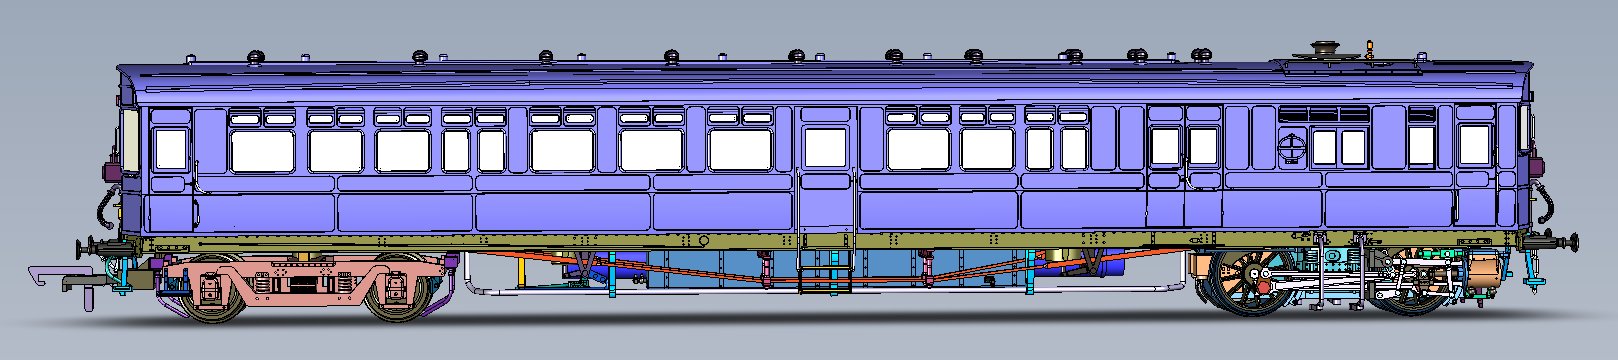 GWR Railmotor CAD Image